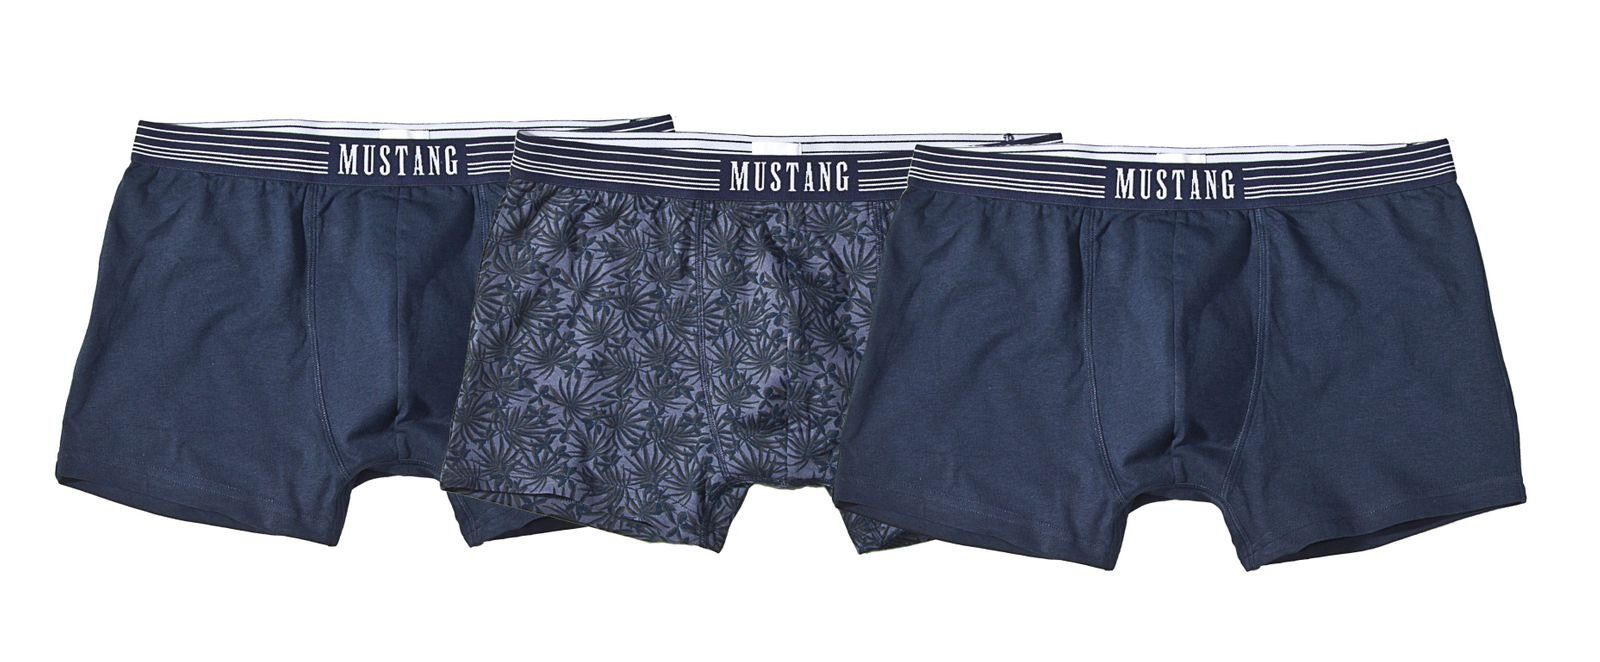 MUSTANG Boxershorts Boxershorts Retropants Unterhosen (Spar-Set, 3-St) 2 x Navy, 1 x Palm print